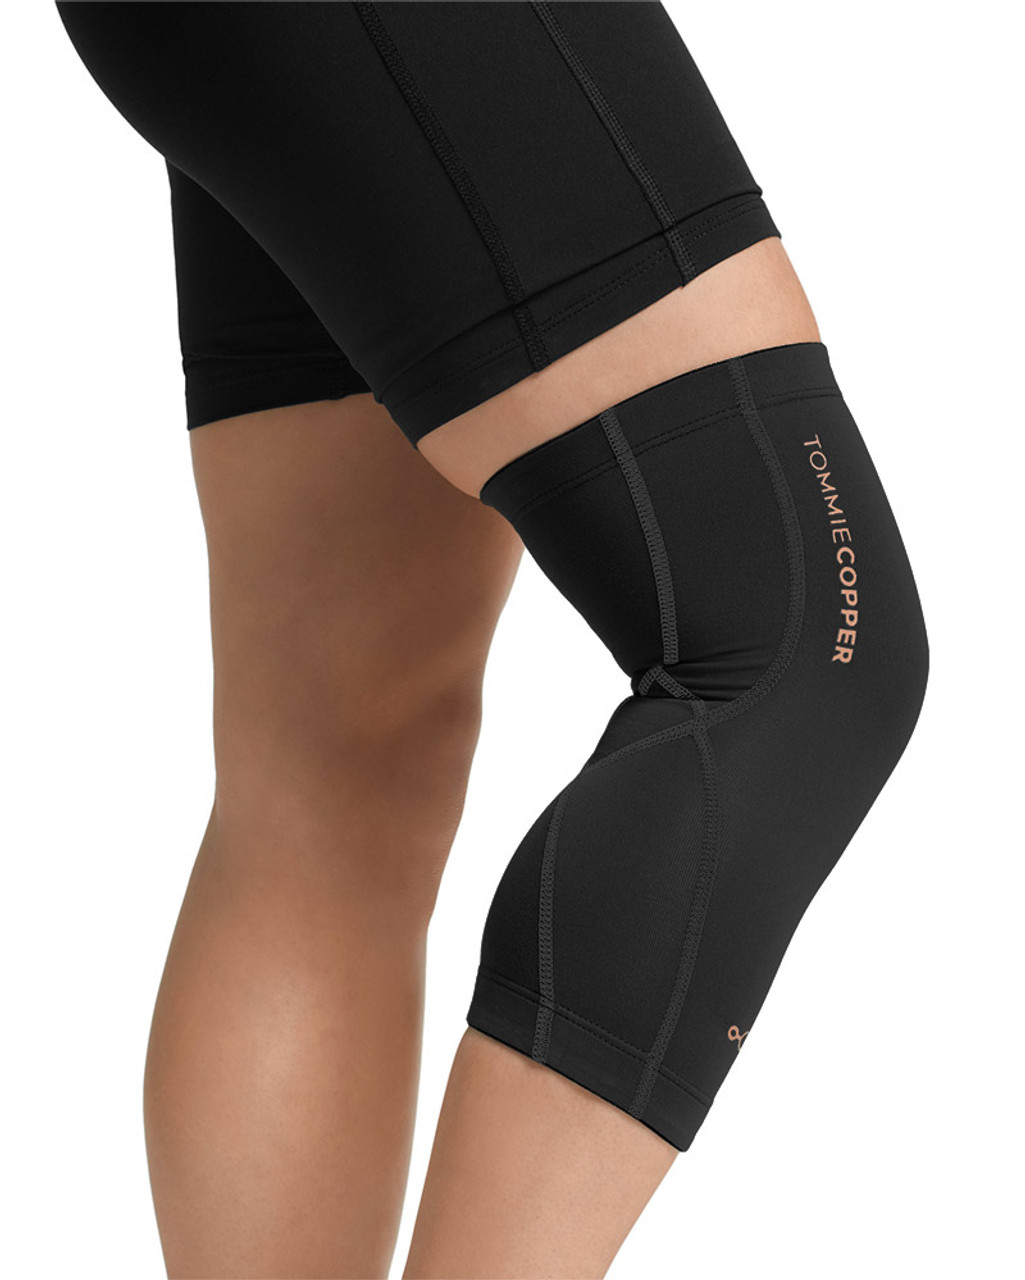 Copper Knee Support for Men Women, Best Knee Brace Compression